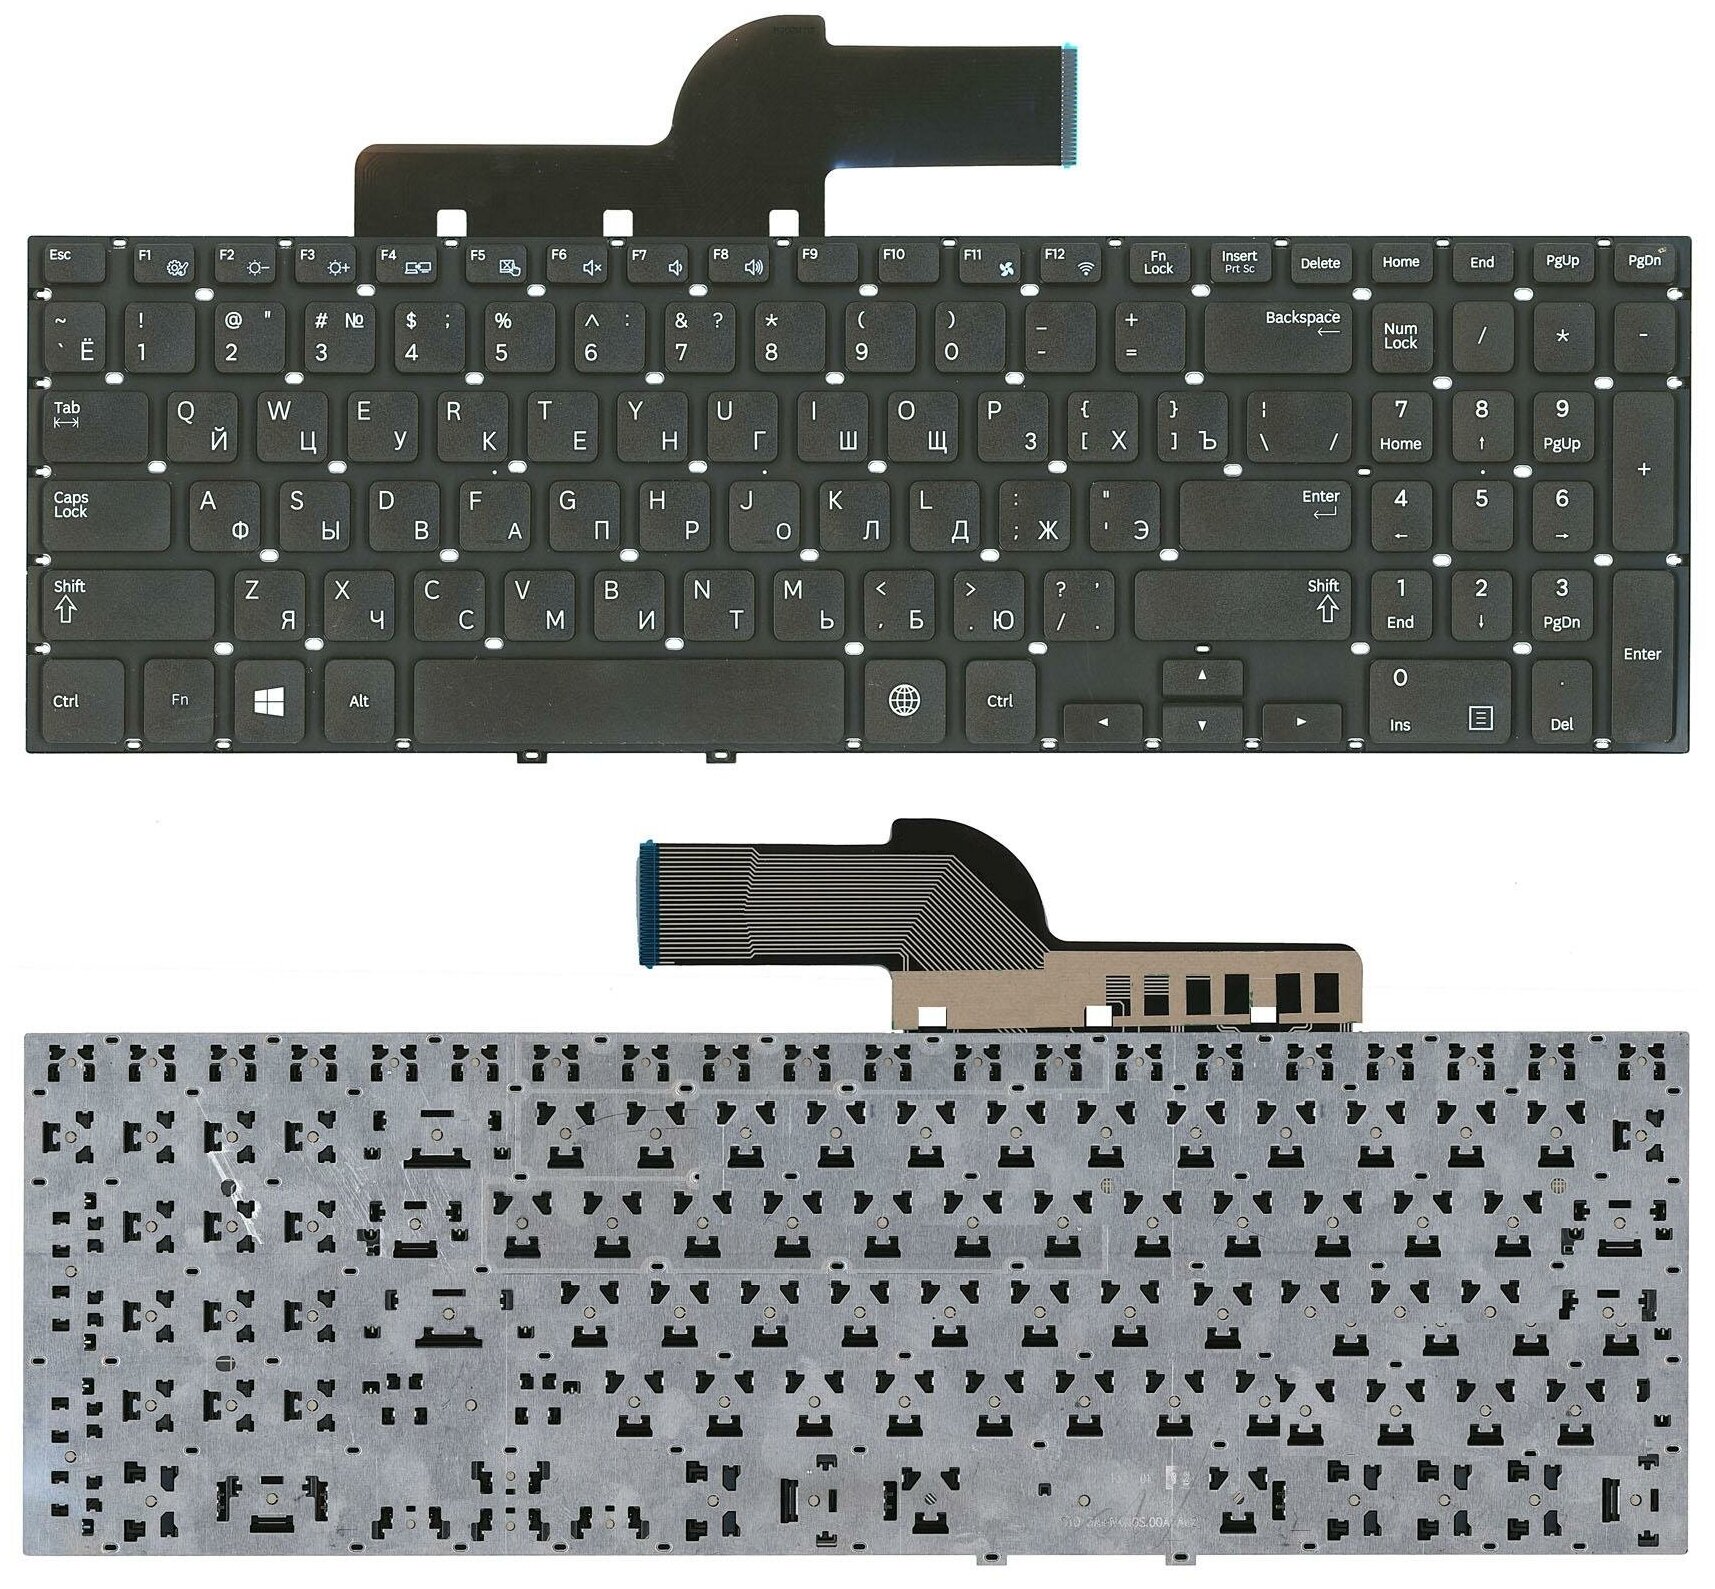 Клавиатура для ноутбука Samsung 355V5C 350V5C NP355V5C NP355V5C-A01 черная